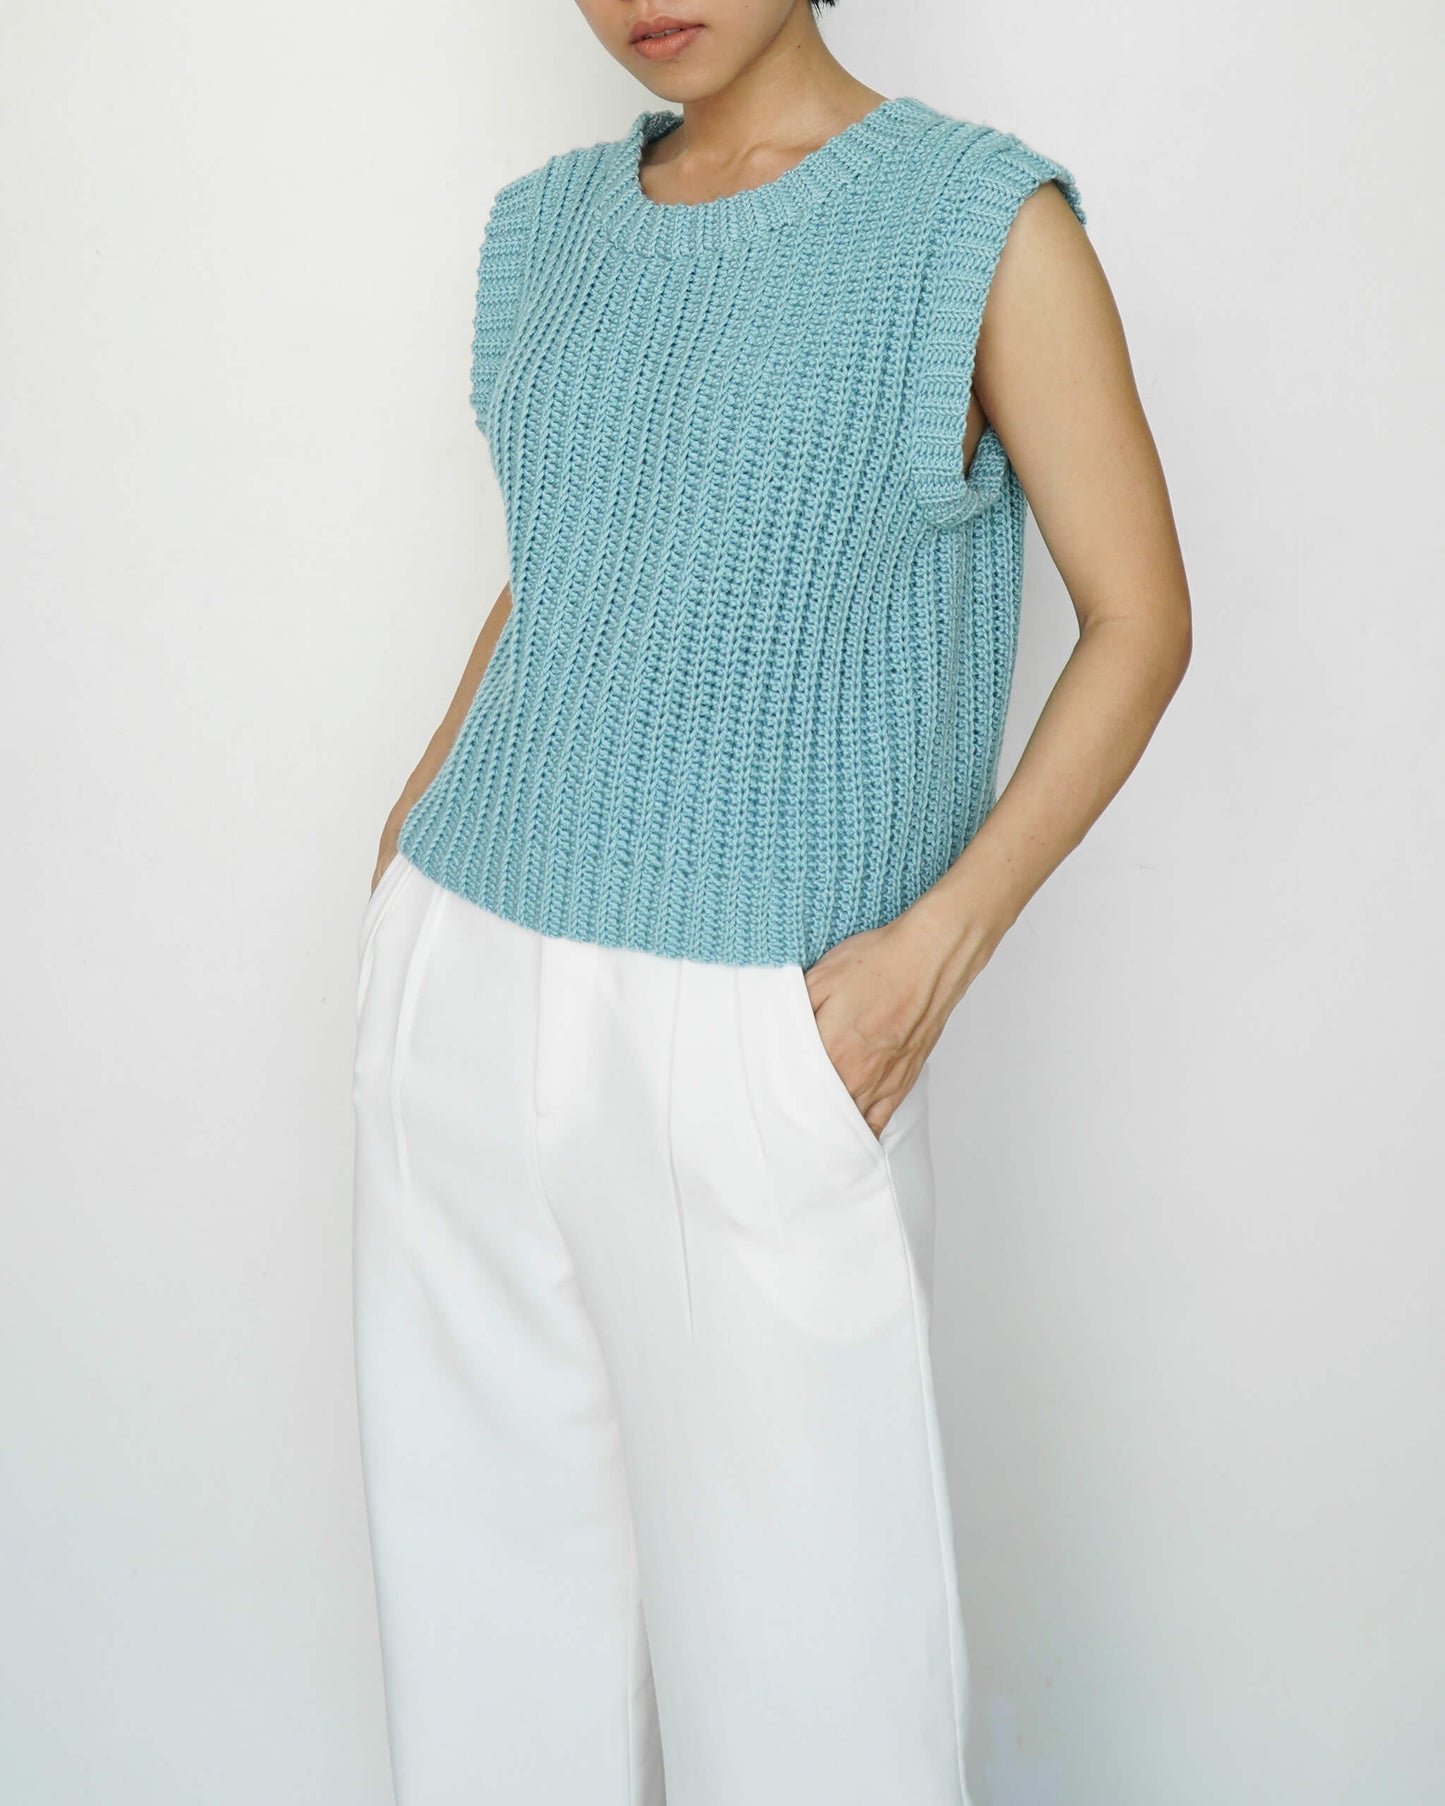 Vest No.31 | Easy crochet pattern